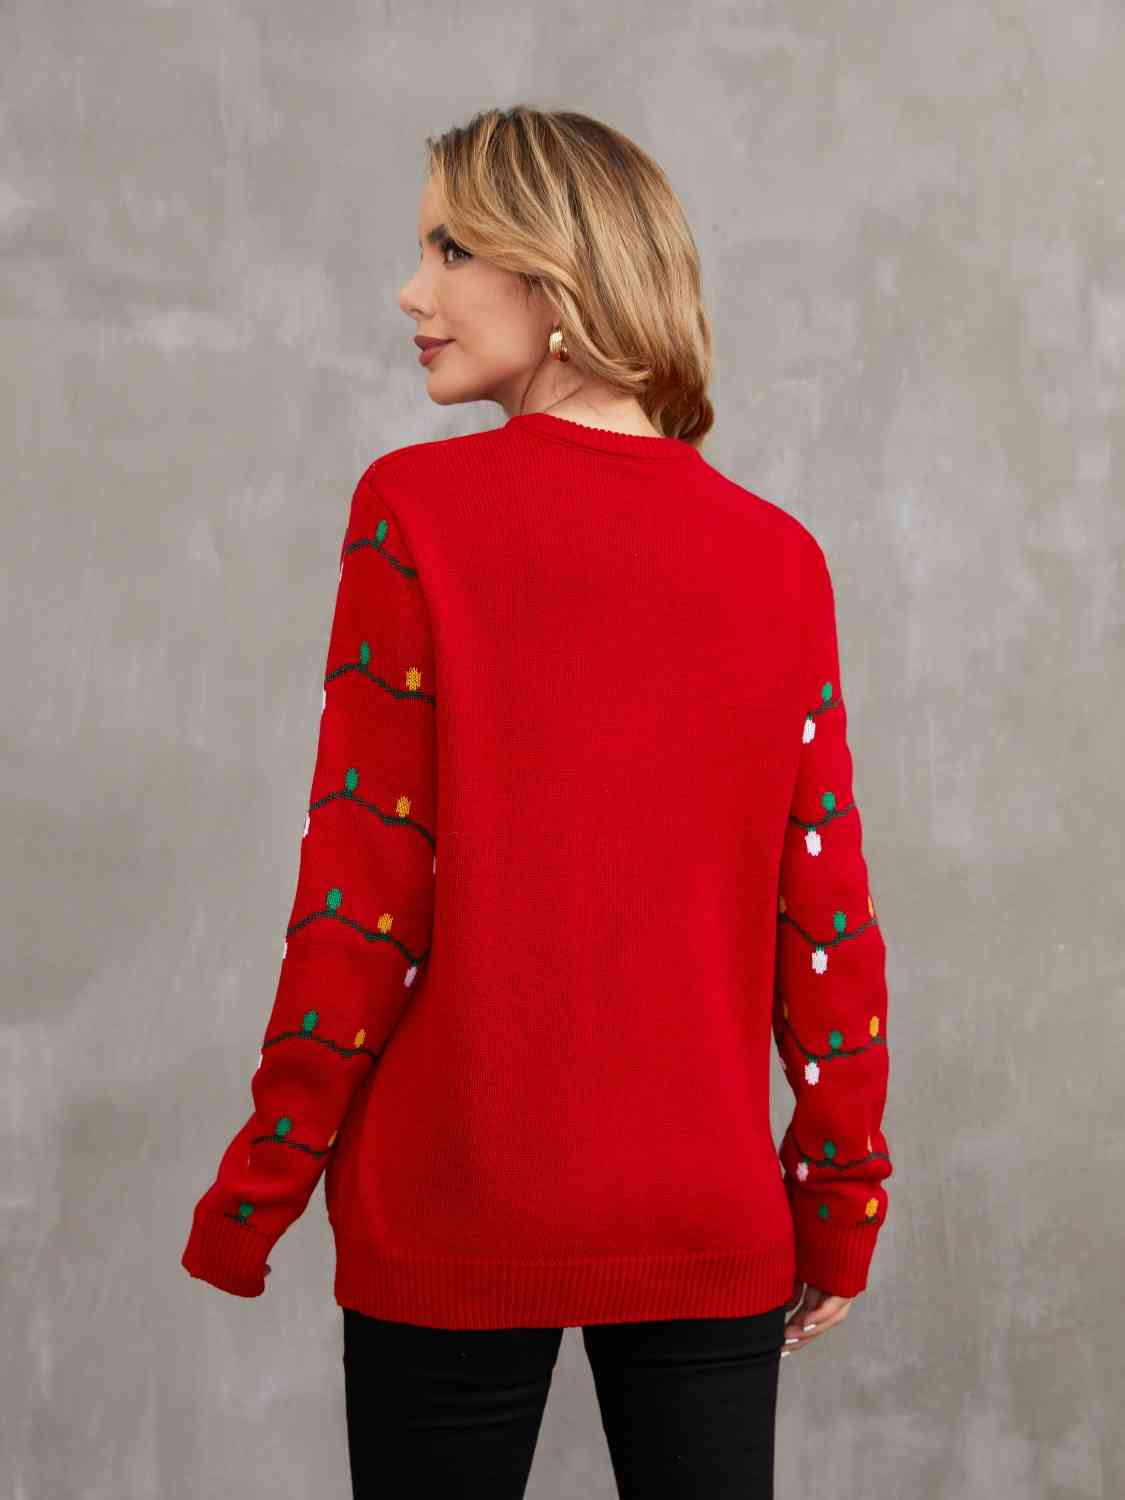 Christmas Tree & Present Theme Round Neck Sweater